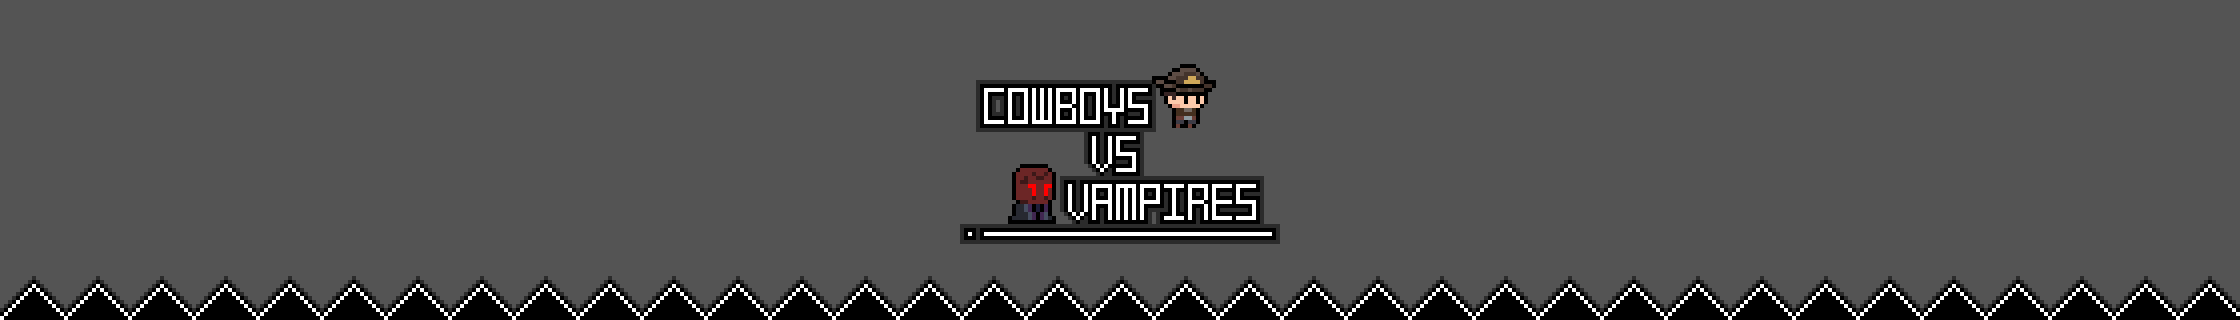 Cowboys Vs Vampires